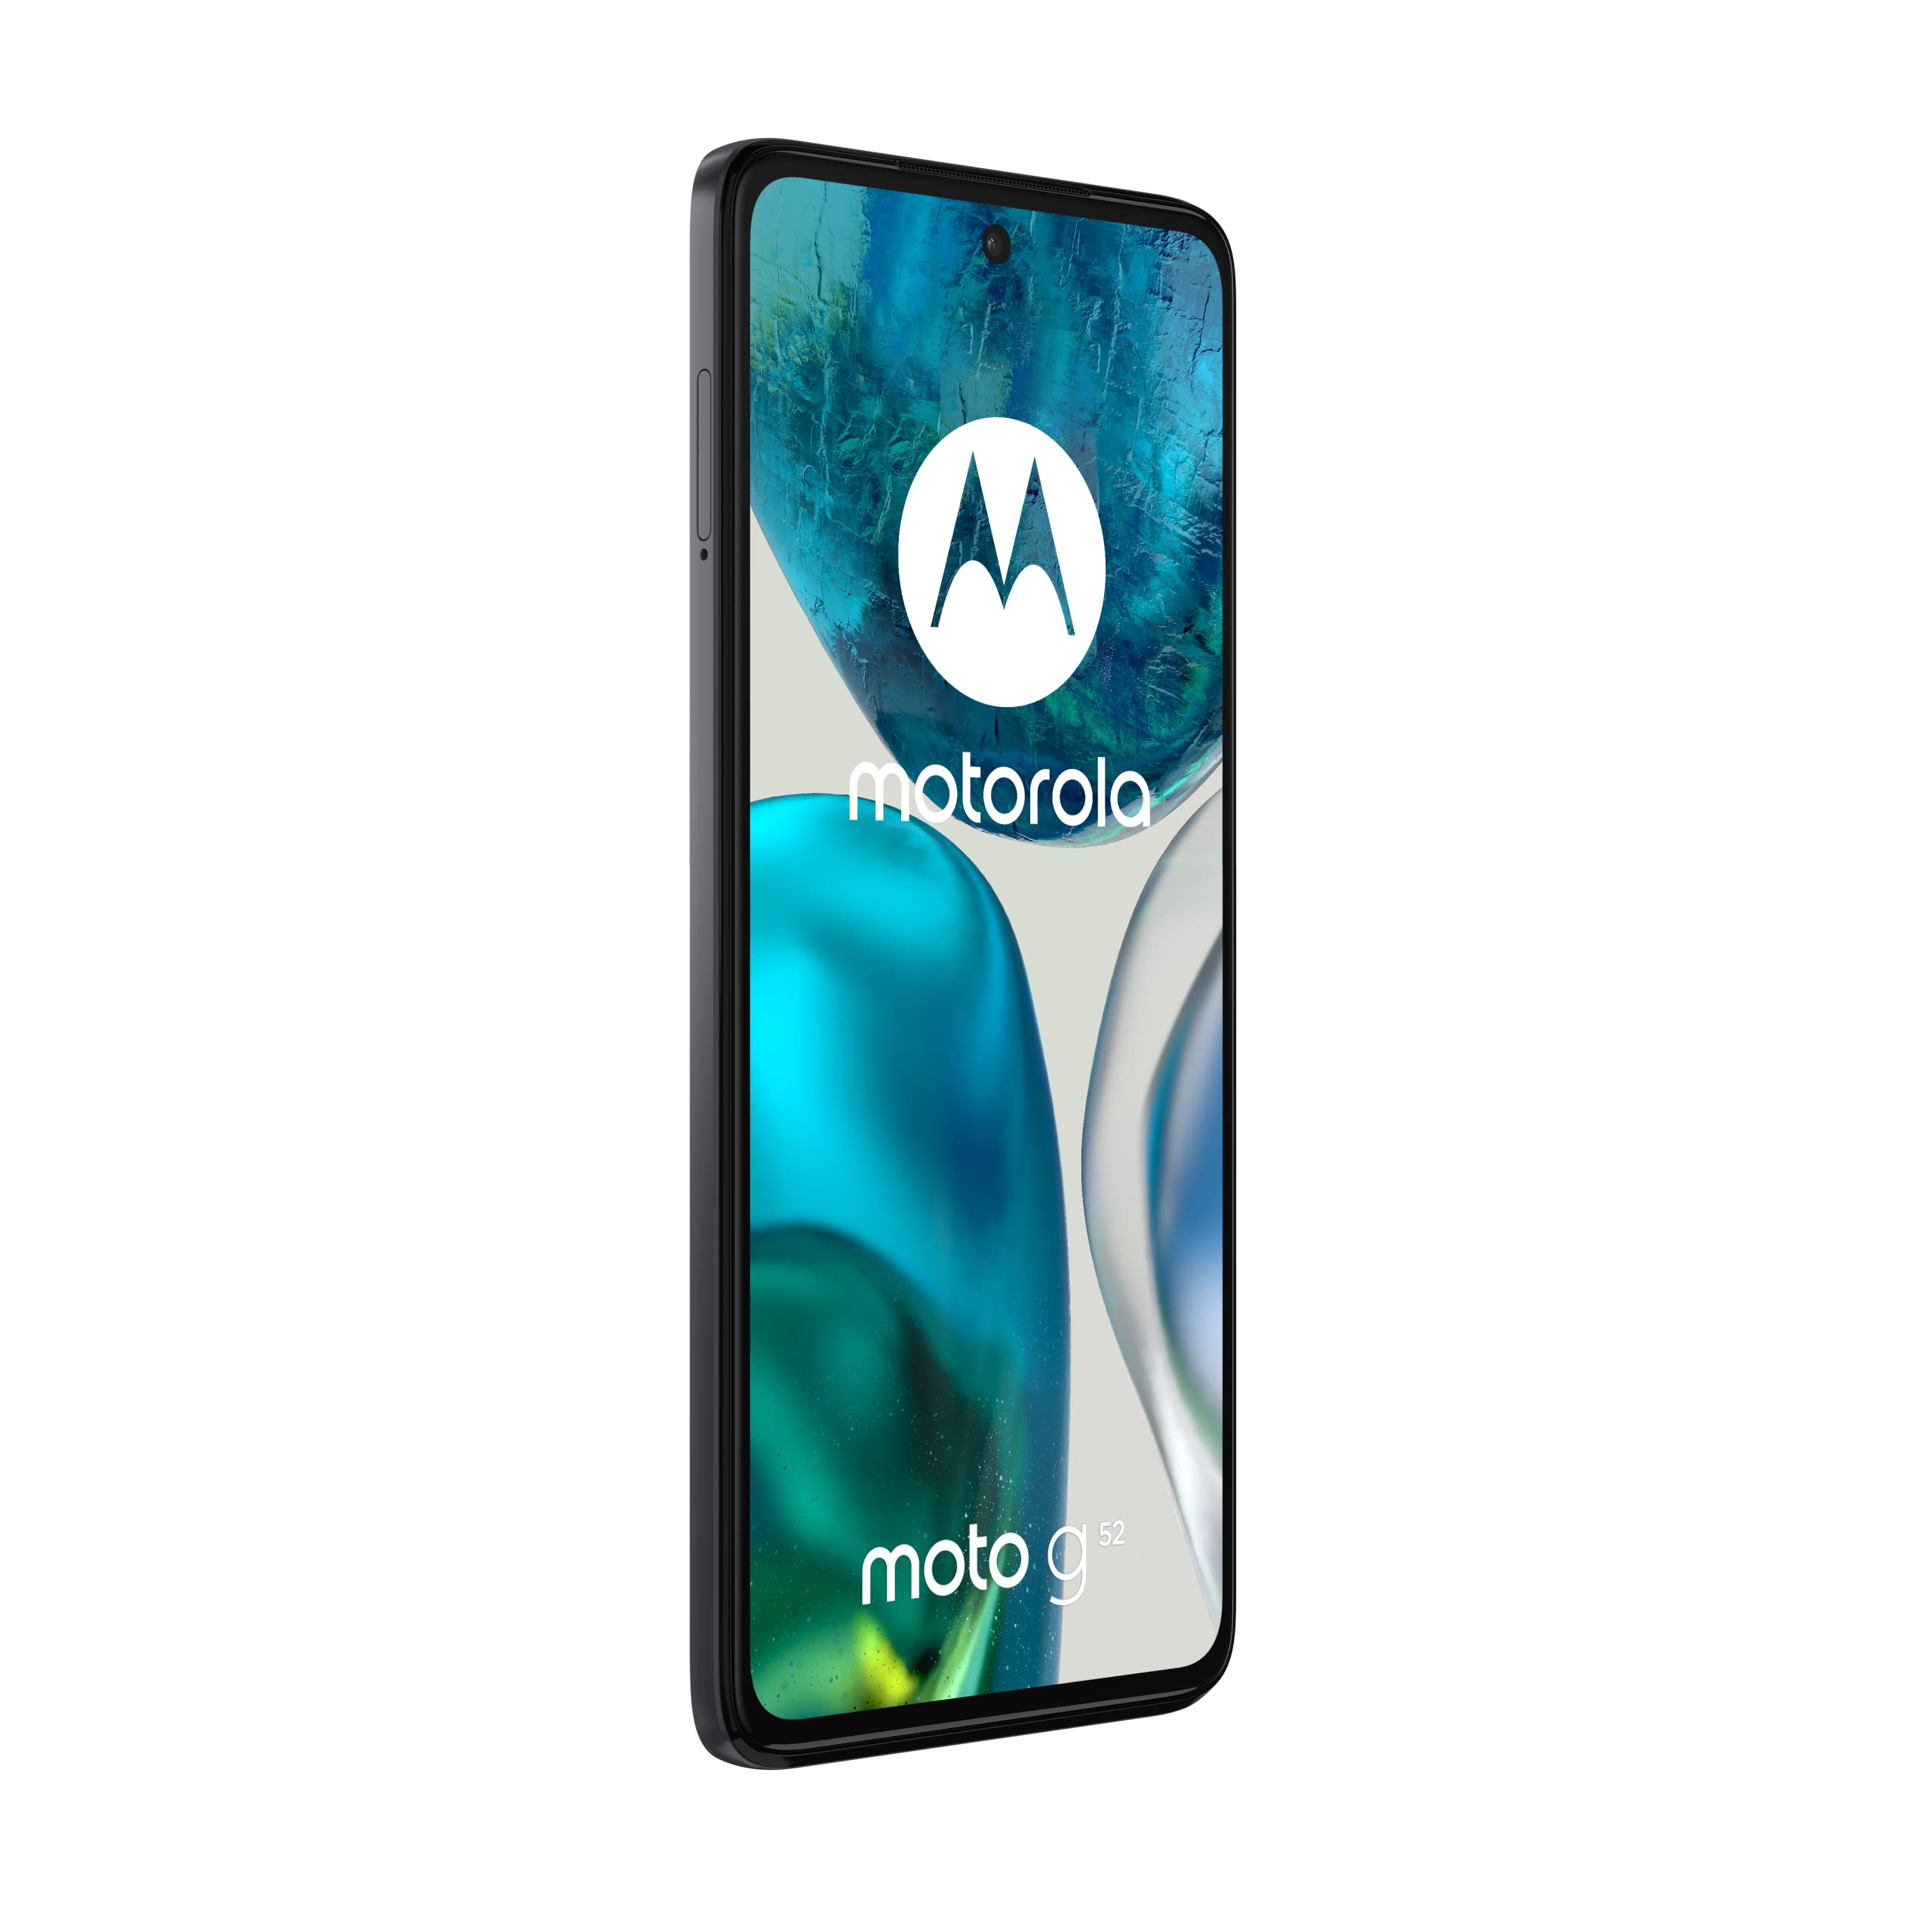 Motorola Moto G52 Dual-SIM 128GB ROM + 6GB RAM (GSM only | No CDMA) Factory Unlocked 4G/LTE Smartphone (Charcoal Gray) - International Version